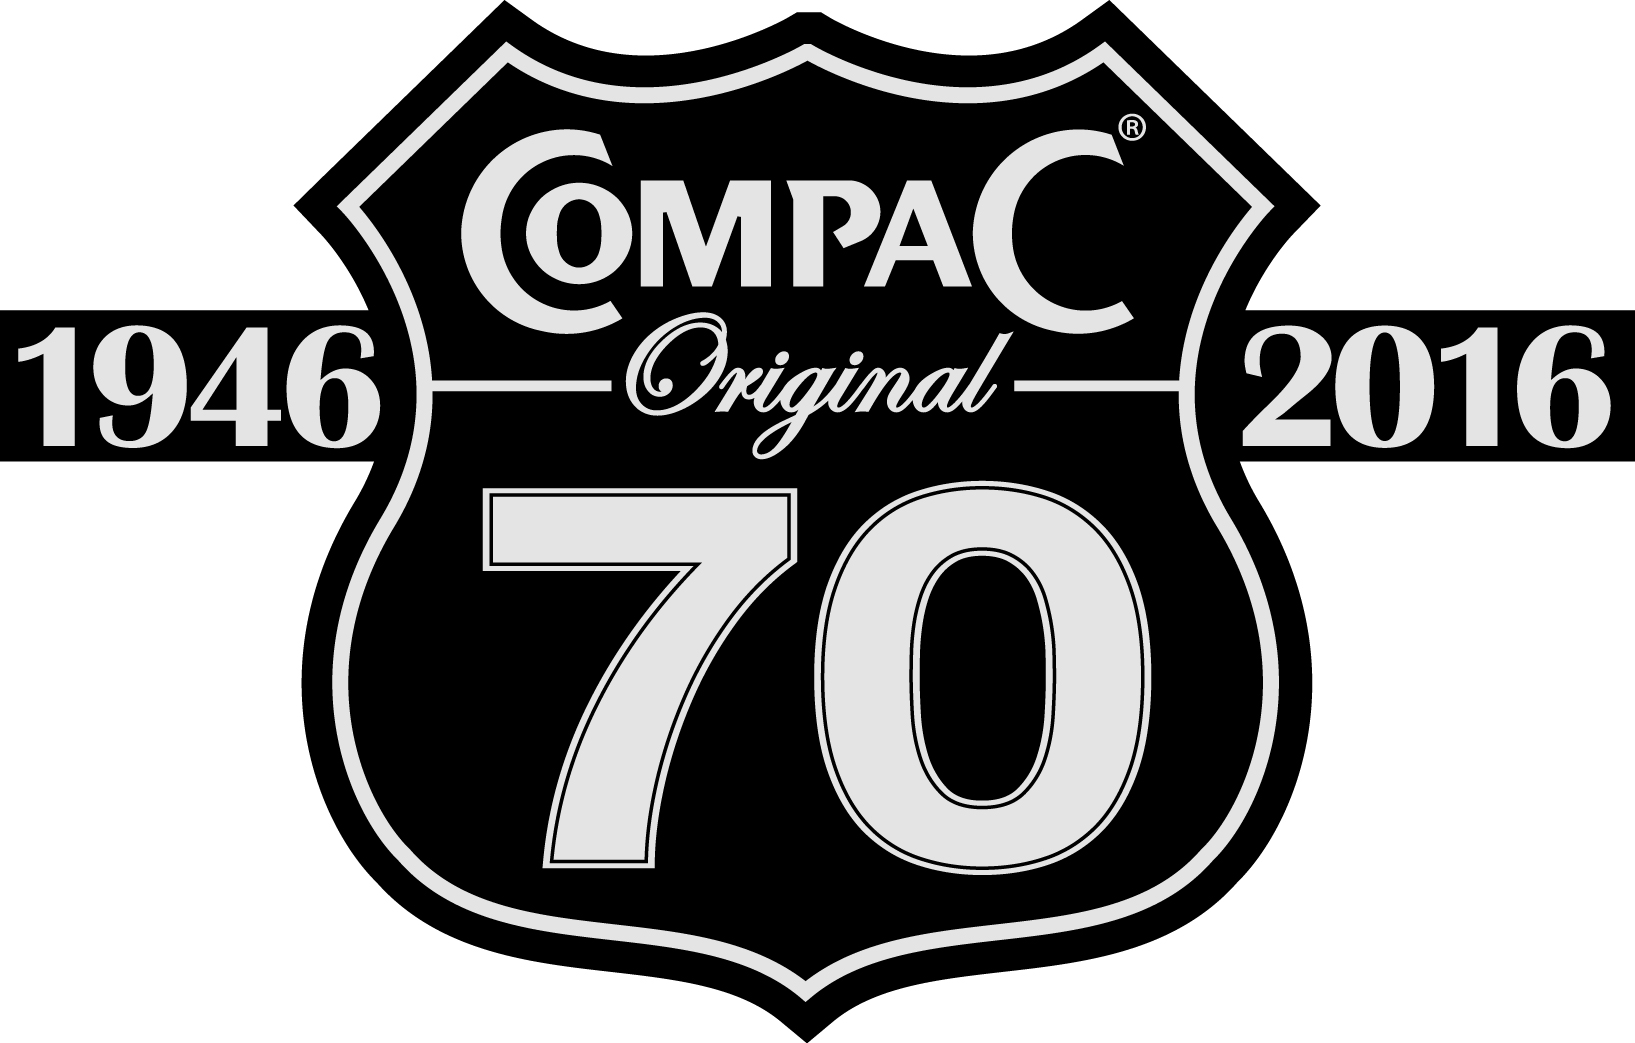 Compac 70 years logo black